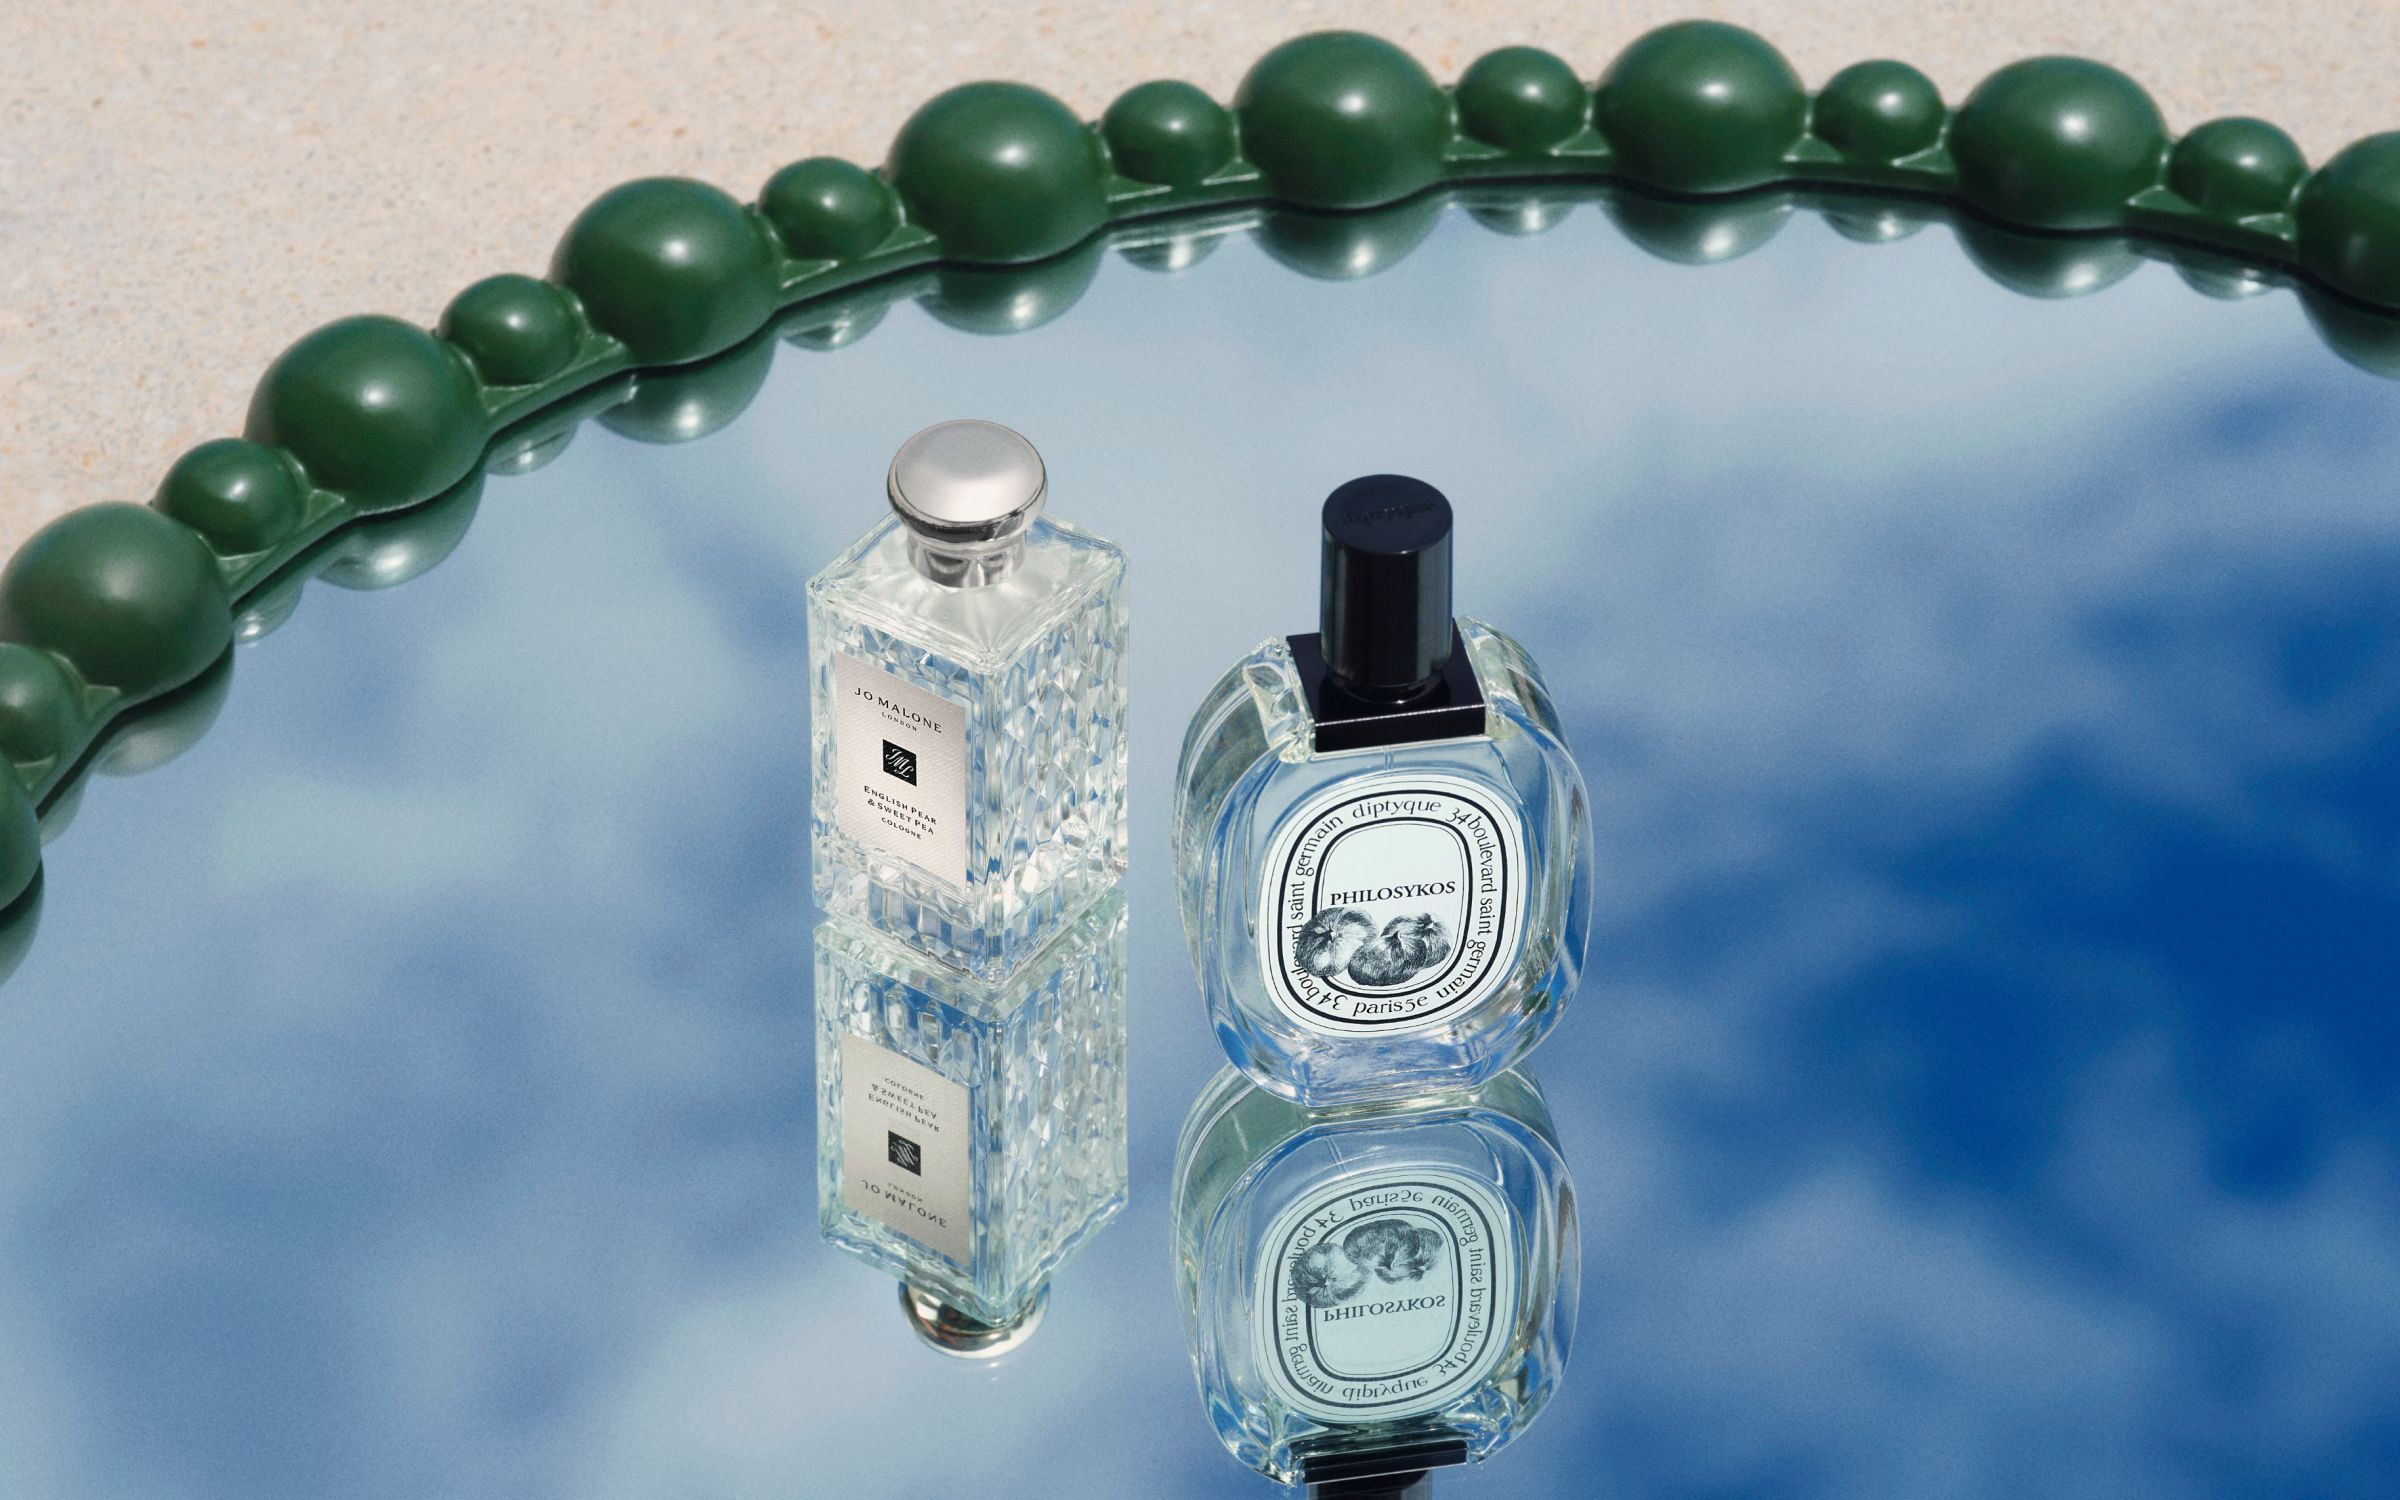 These fresh feel-good fragrances smell like spring/summer